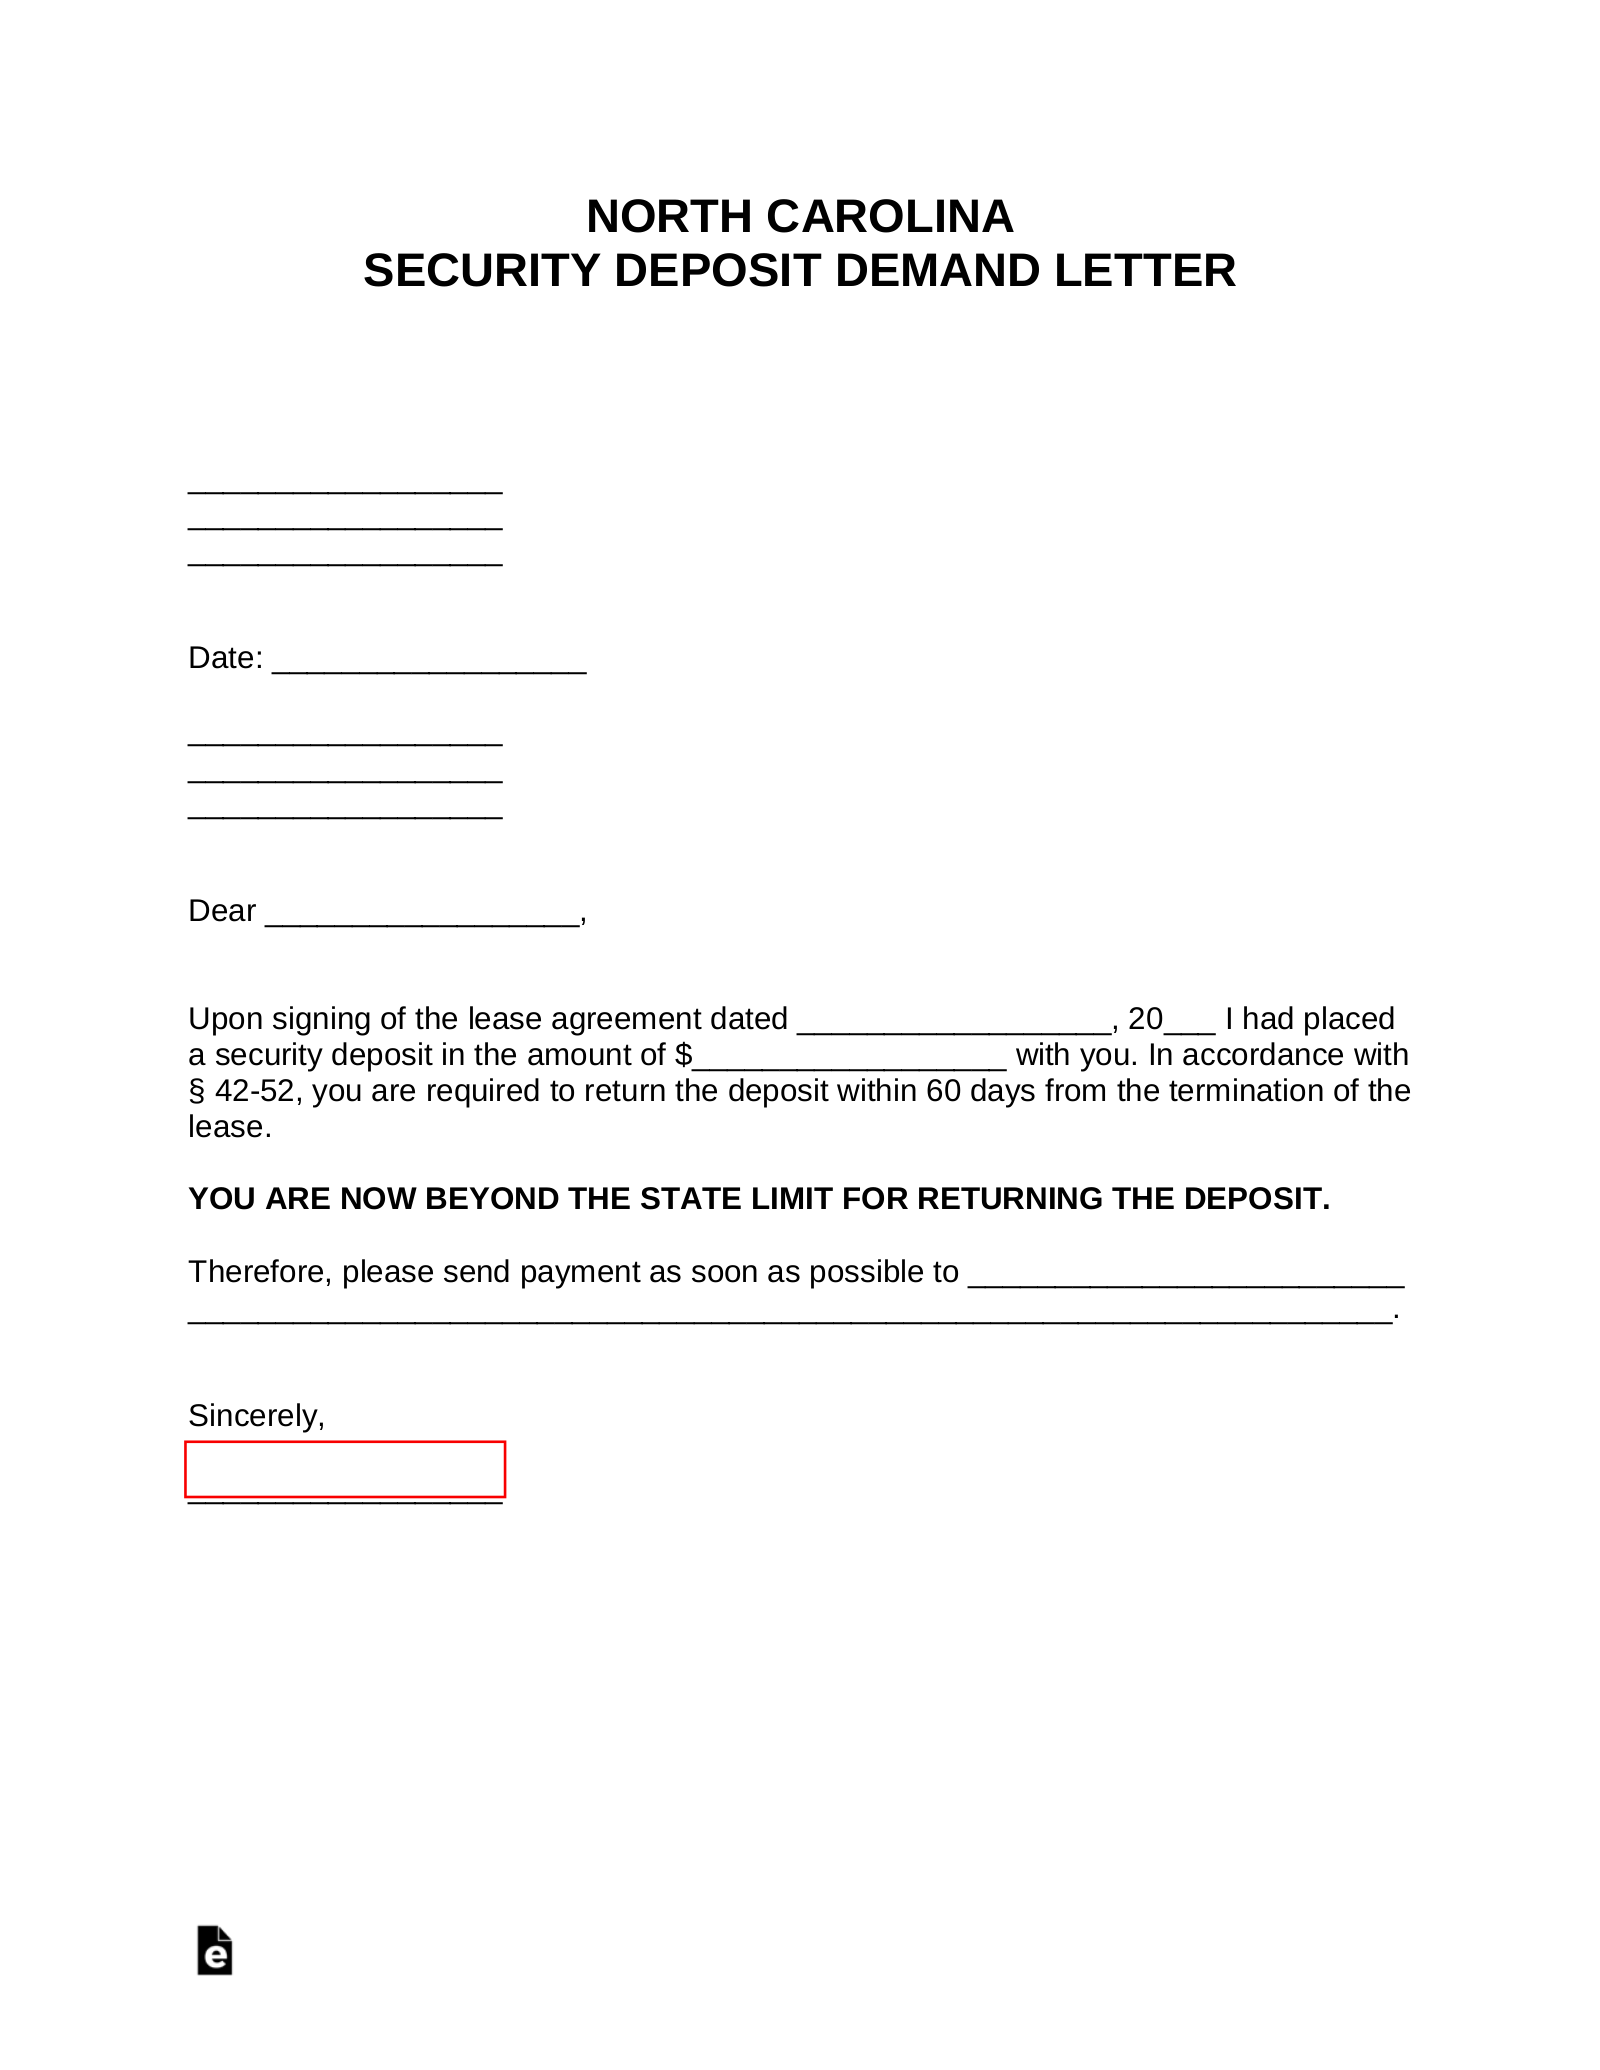 North Carolina Security Deposit Demand Letter